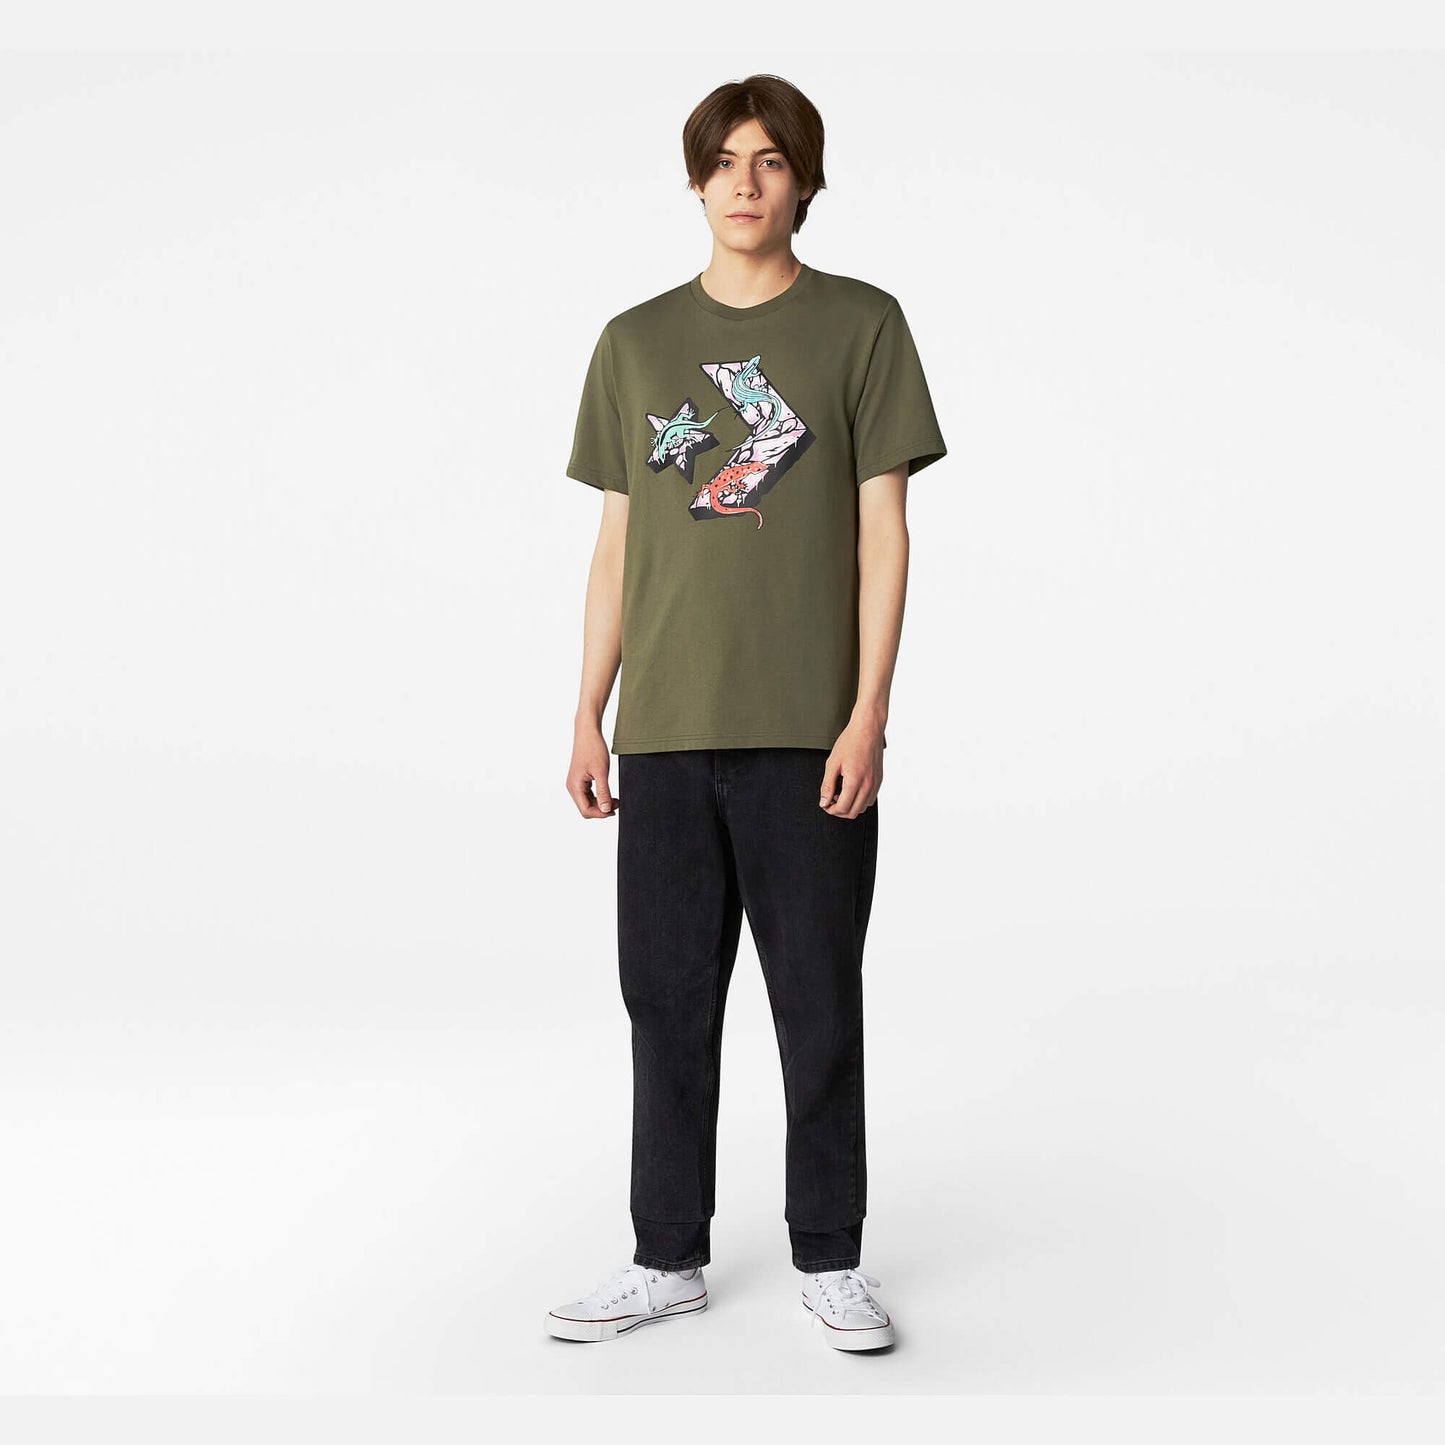 Converse Star Chevron Exotic Lizard Graphic T-Shirt Olive